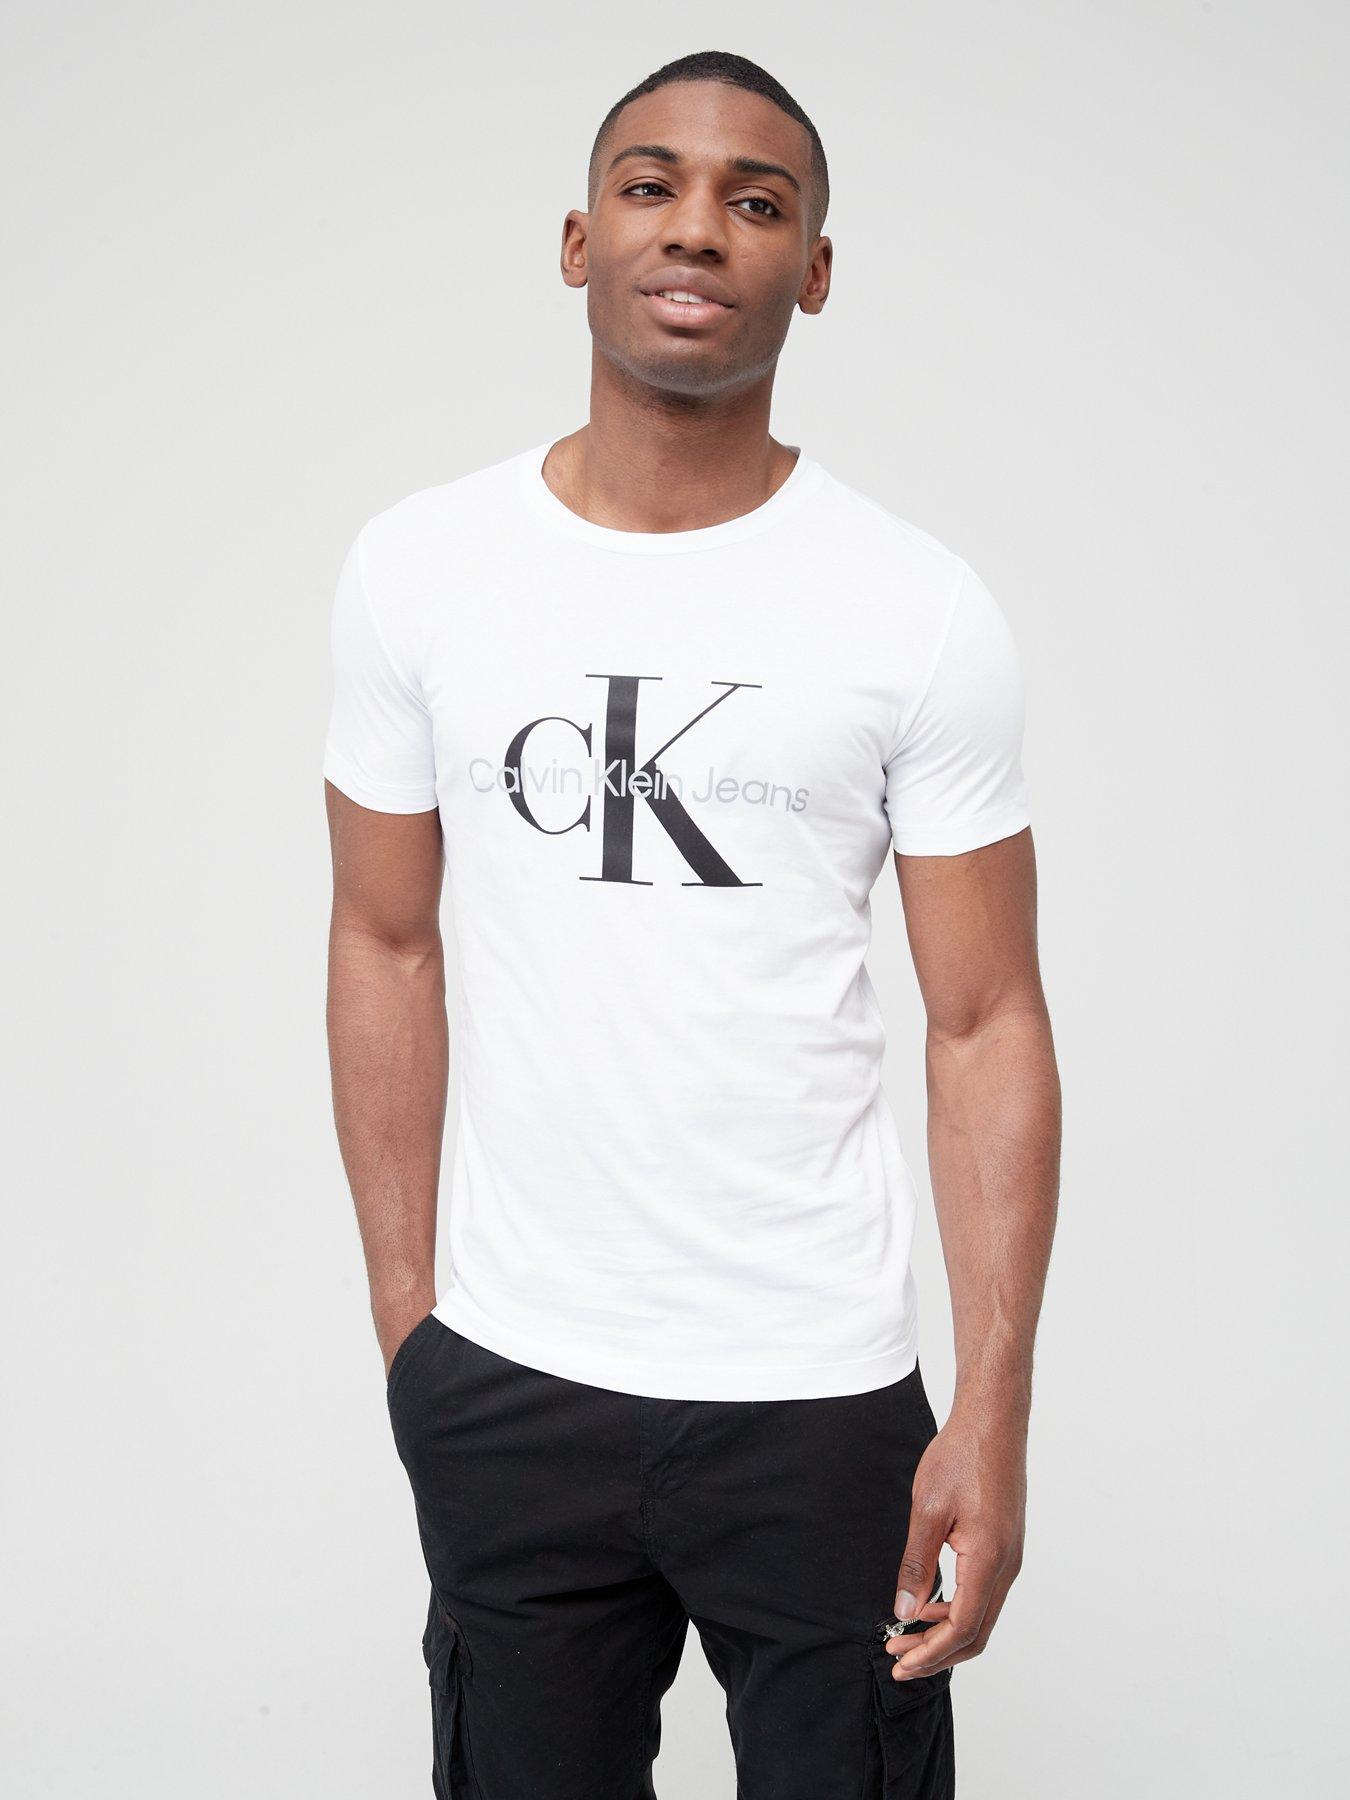 stok grens breuk M | Calvin klein jeans | T-shirts & polos | Men | www.very.co.uk